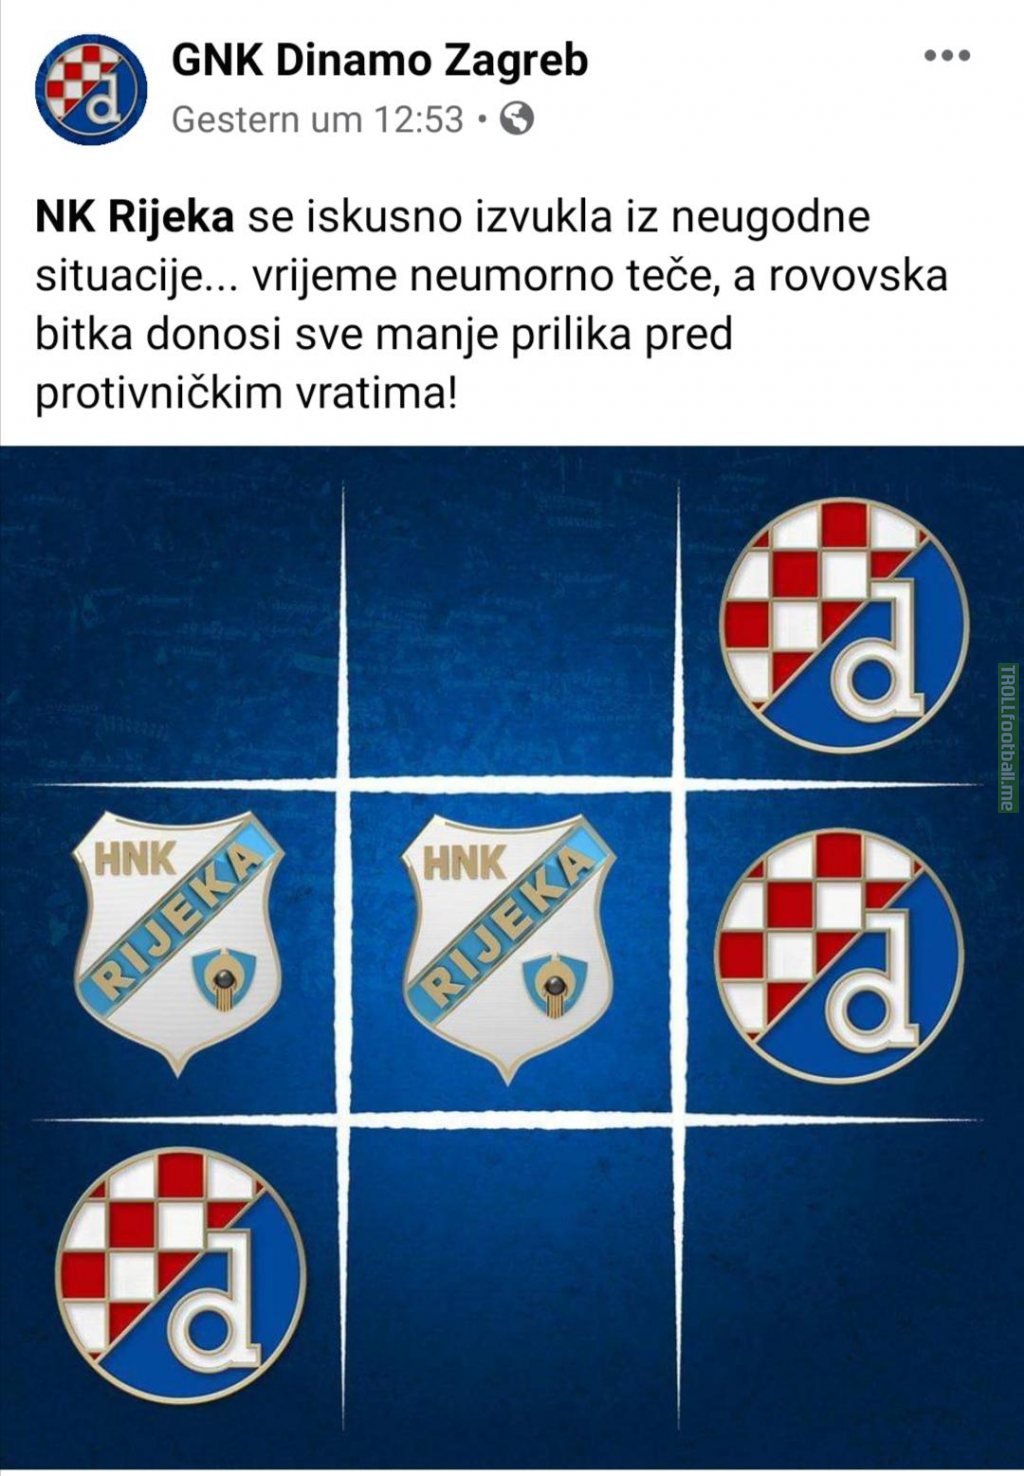 Croatian football league (HNL) continues with tick tack toe